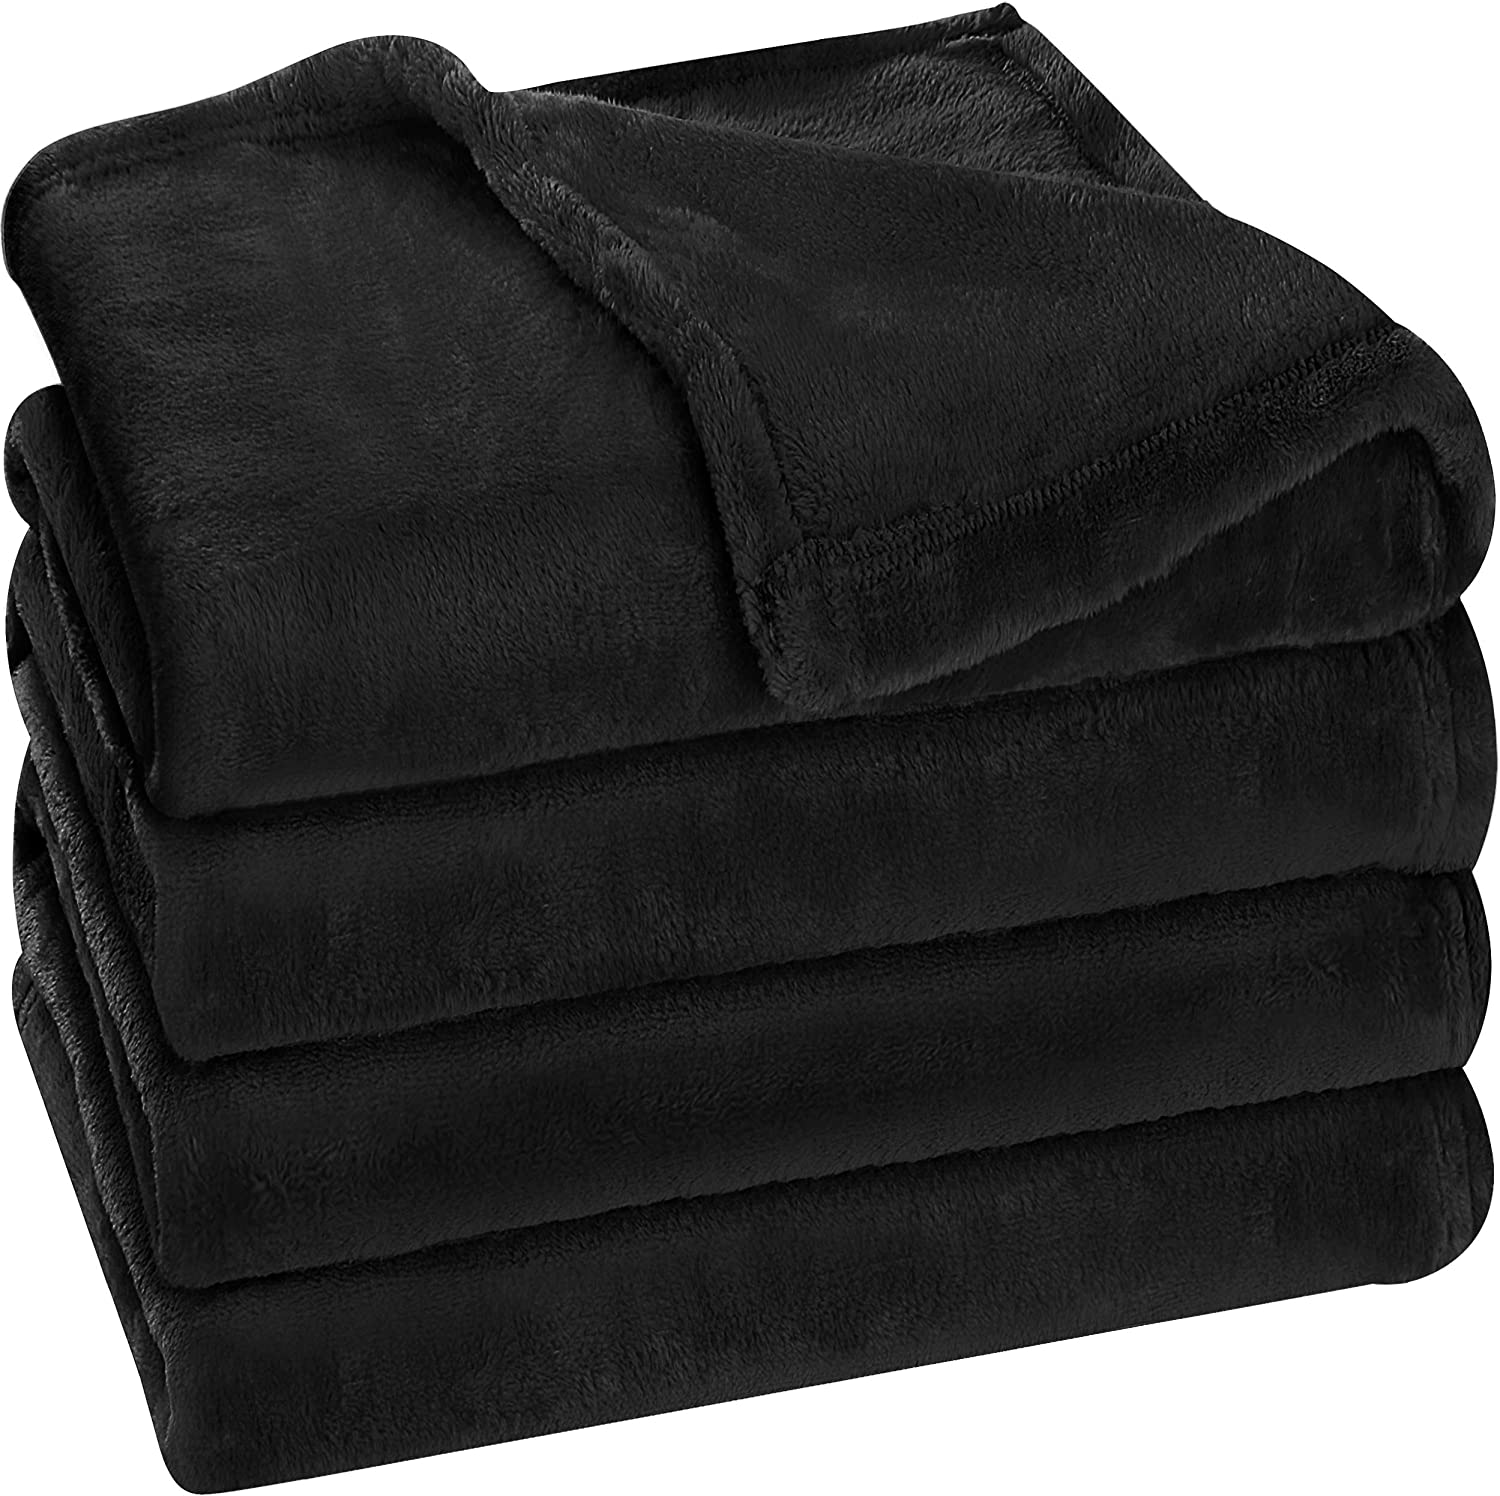 Bedding Fleece Blanket Queen Size Grey 300GSM Luxury Fuzzy Soft Anti-Static Microfiber Bed Blanket (90x90 Inches)